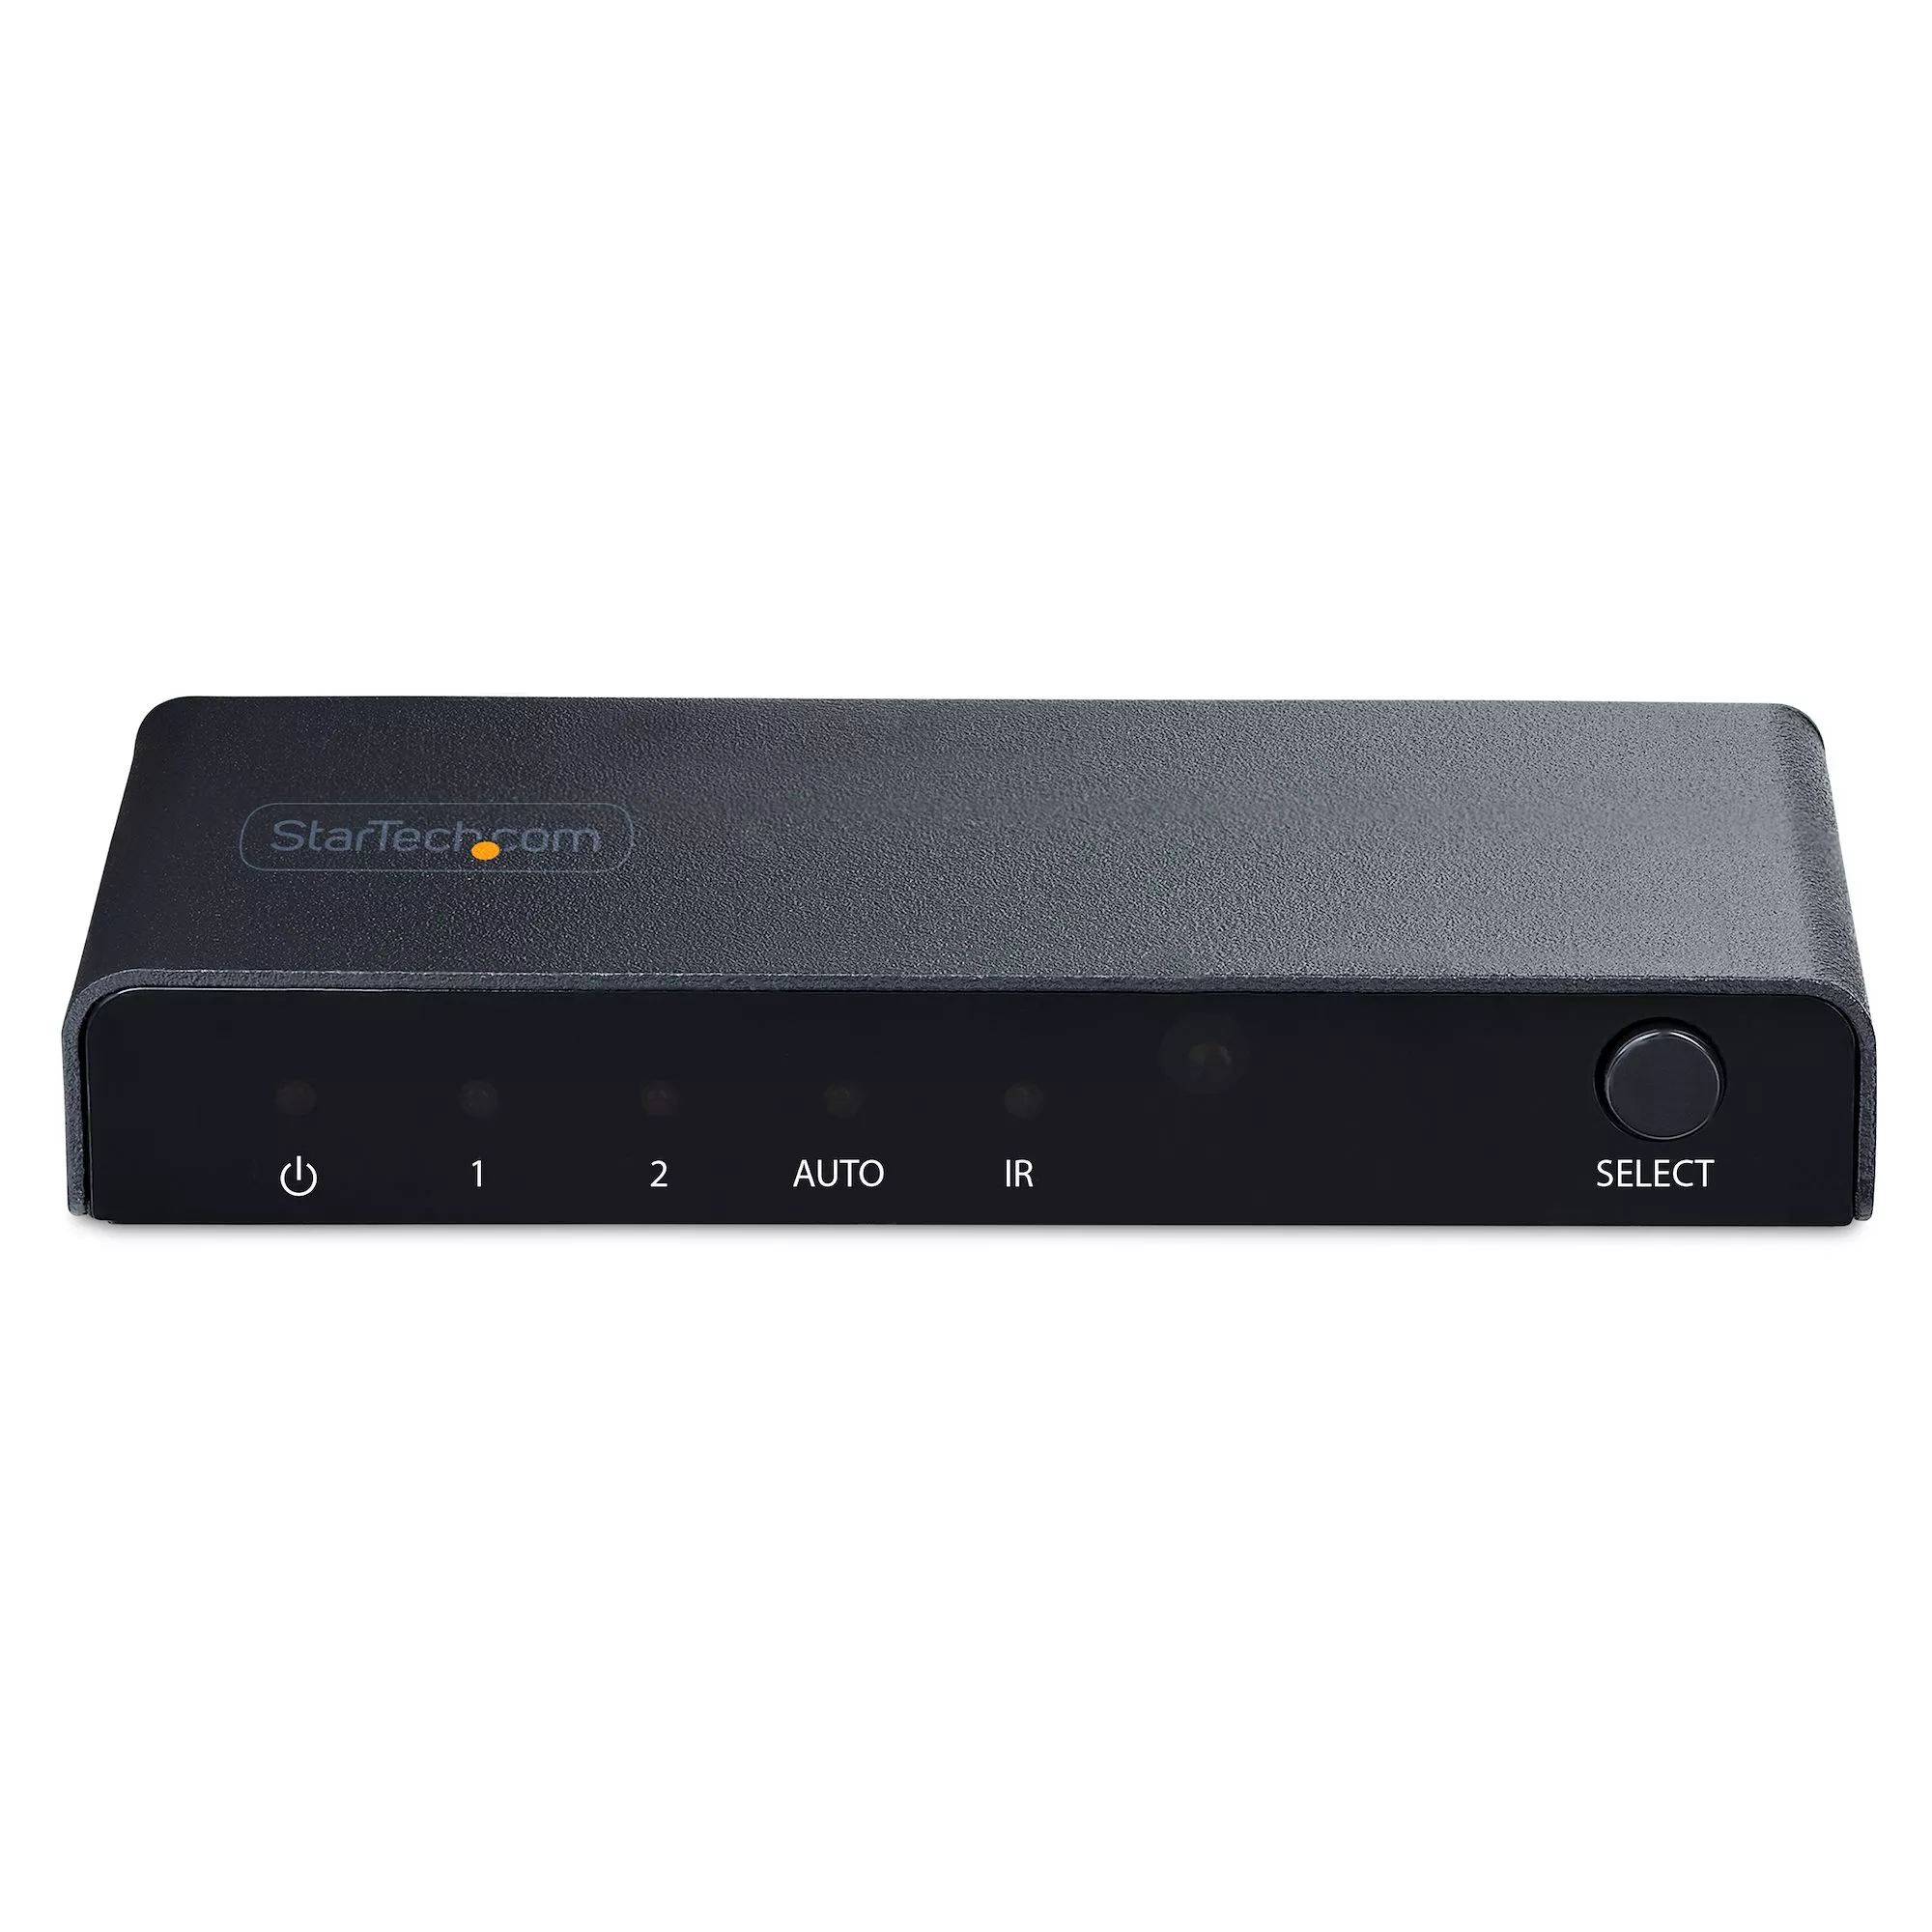 Vente StarTech.com Switch HDMI 8K à 2 Ports - StarTech.com au meilleur prix - visuel 4